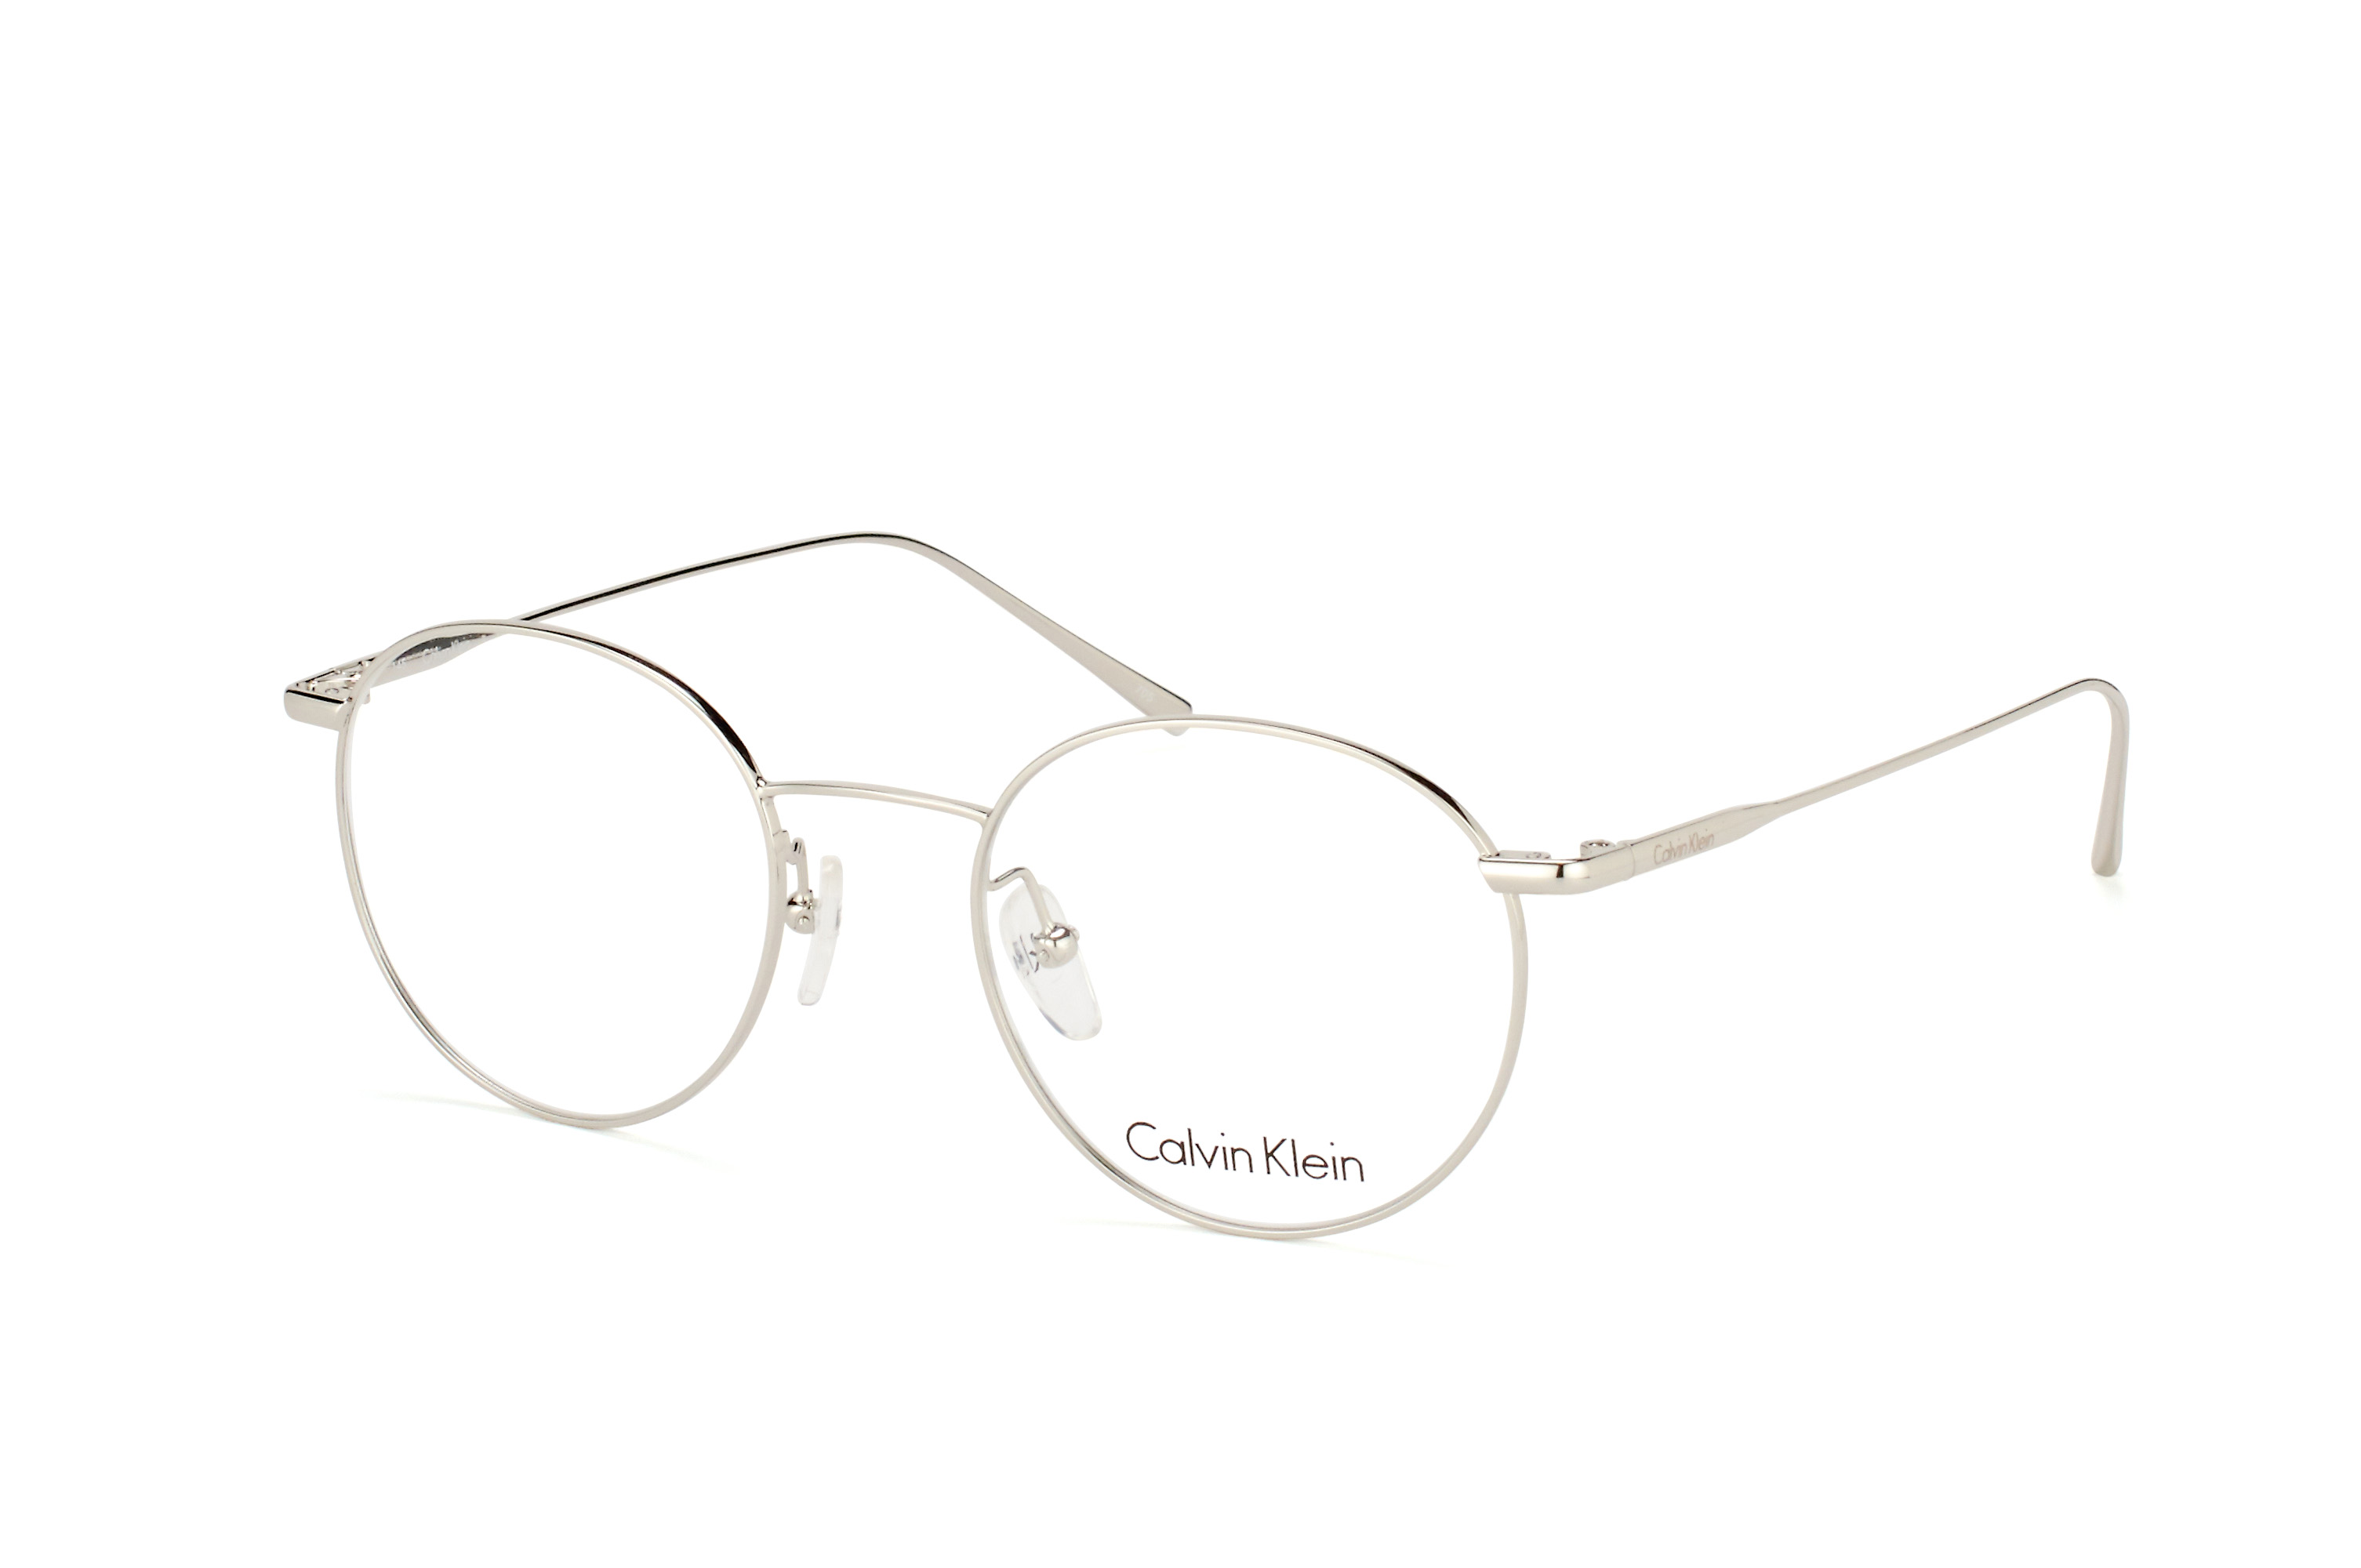 Buy Calvin Klein CK 5460 046 Glasses